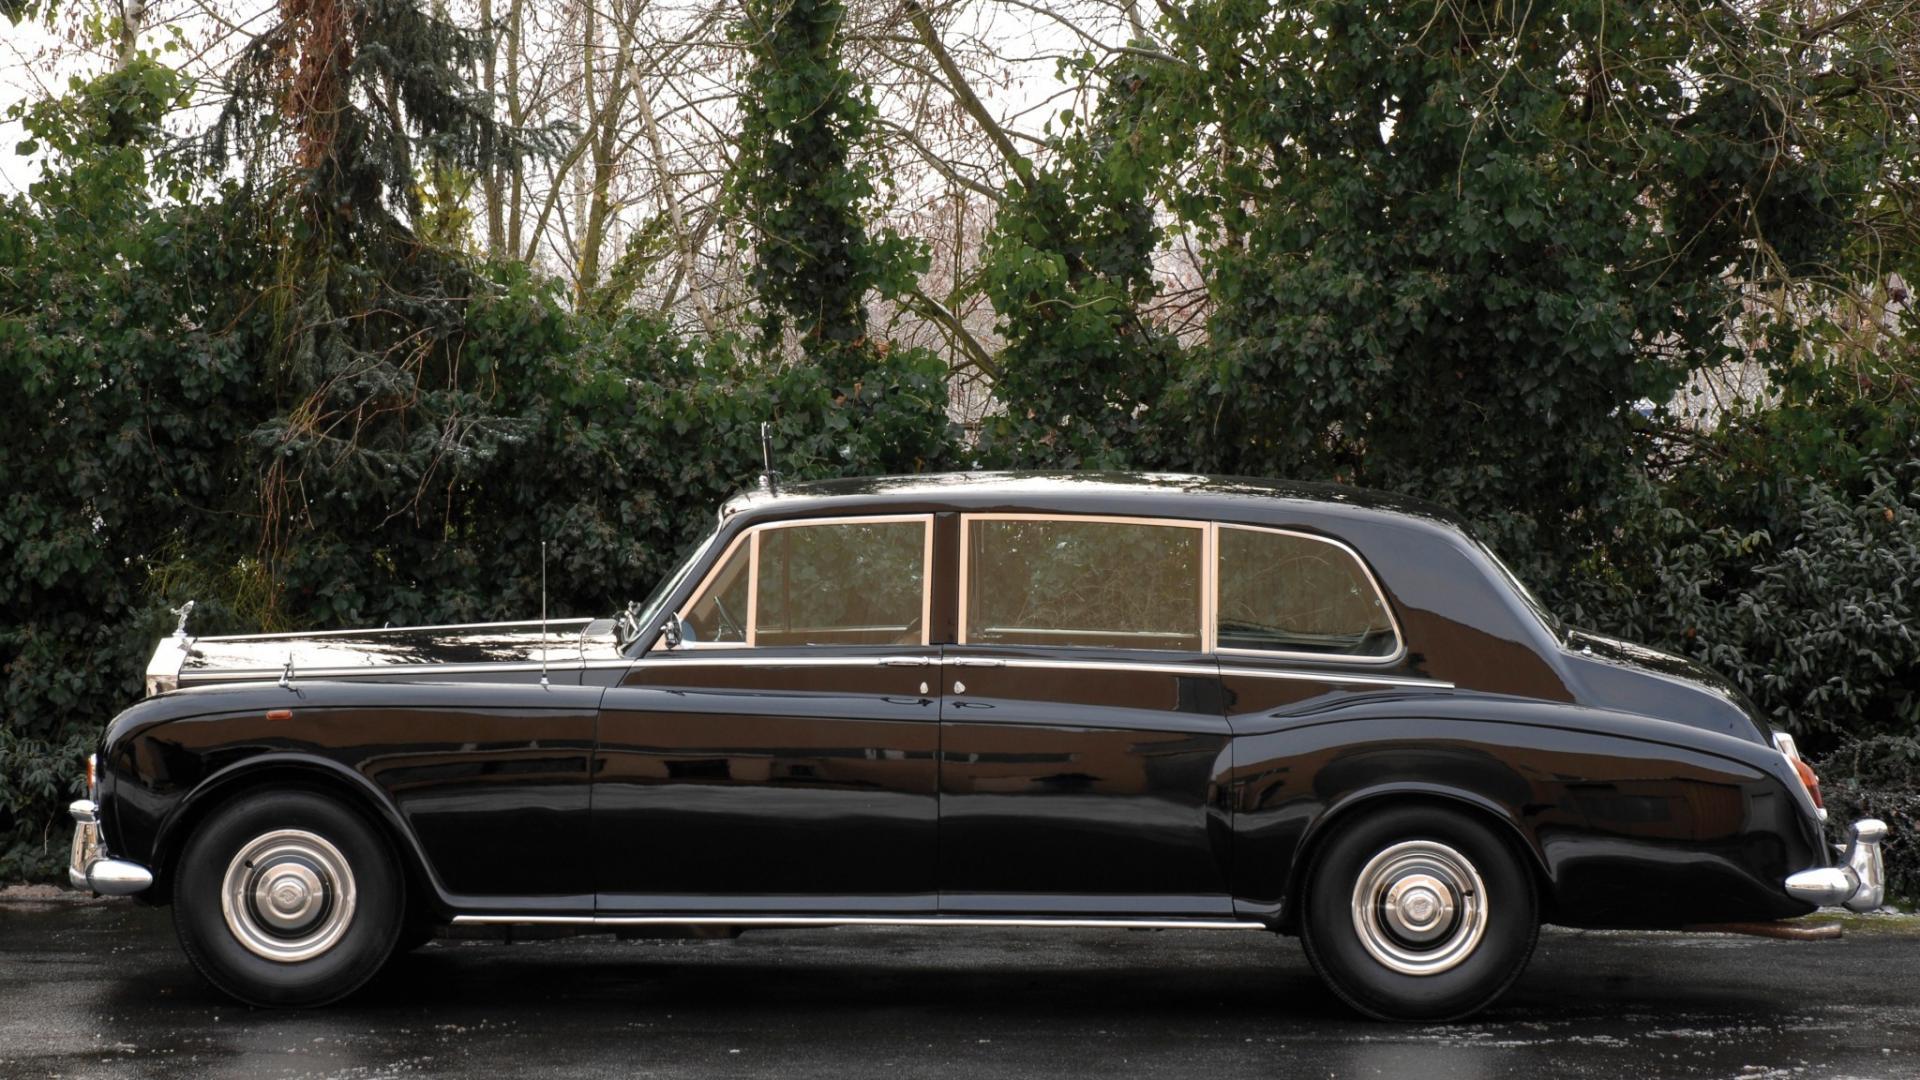 Rolls royce phantom black cars classic wallpapers